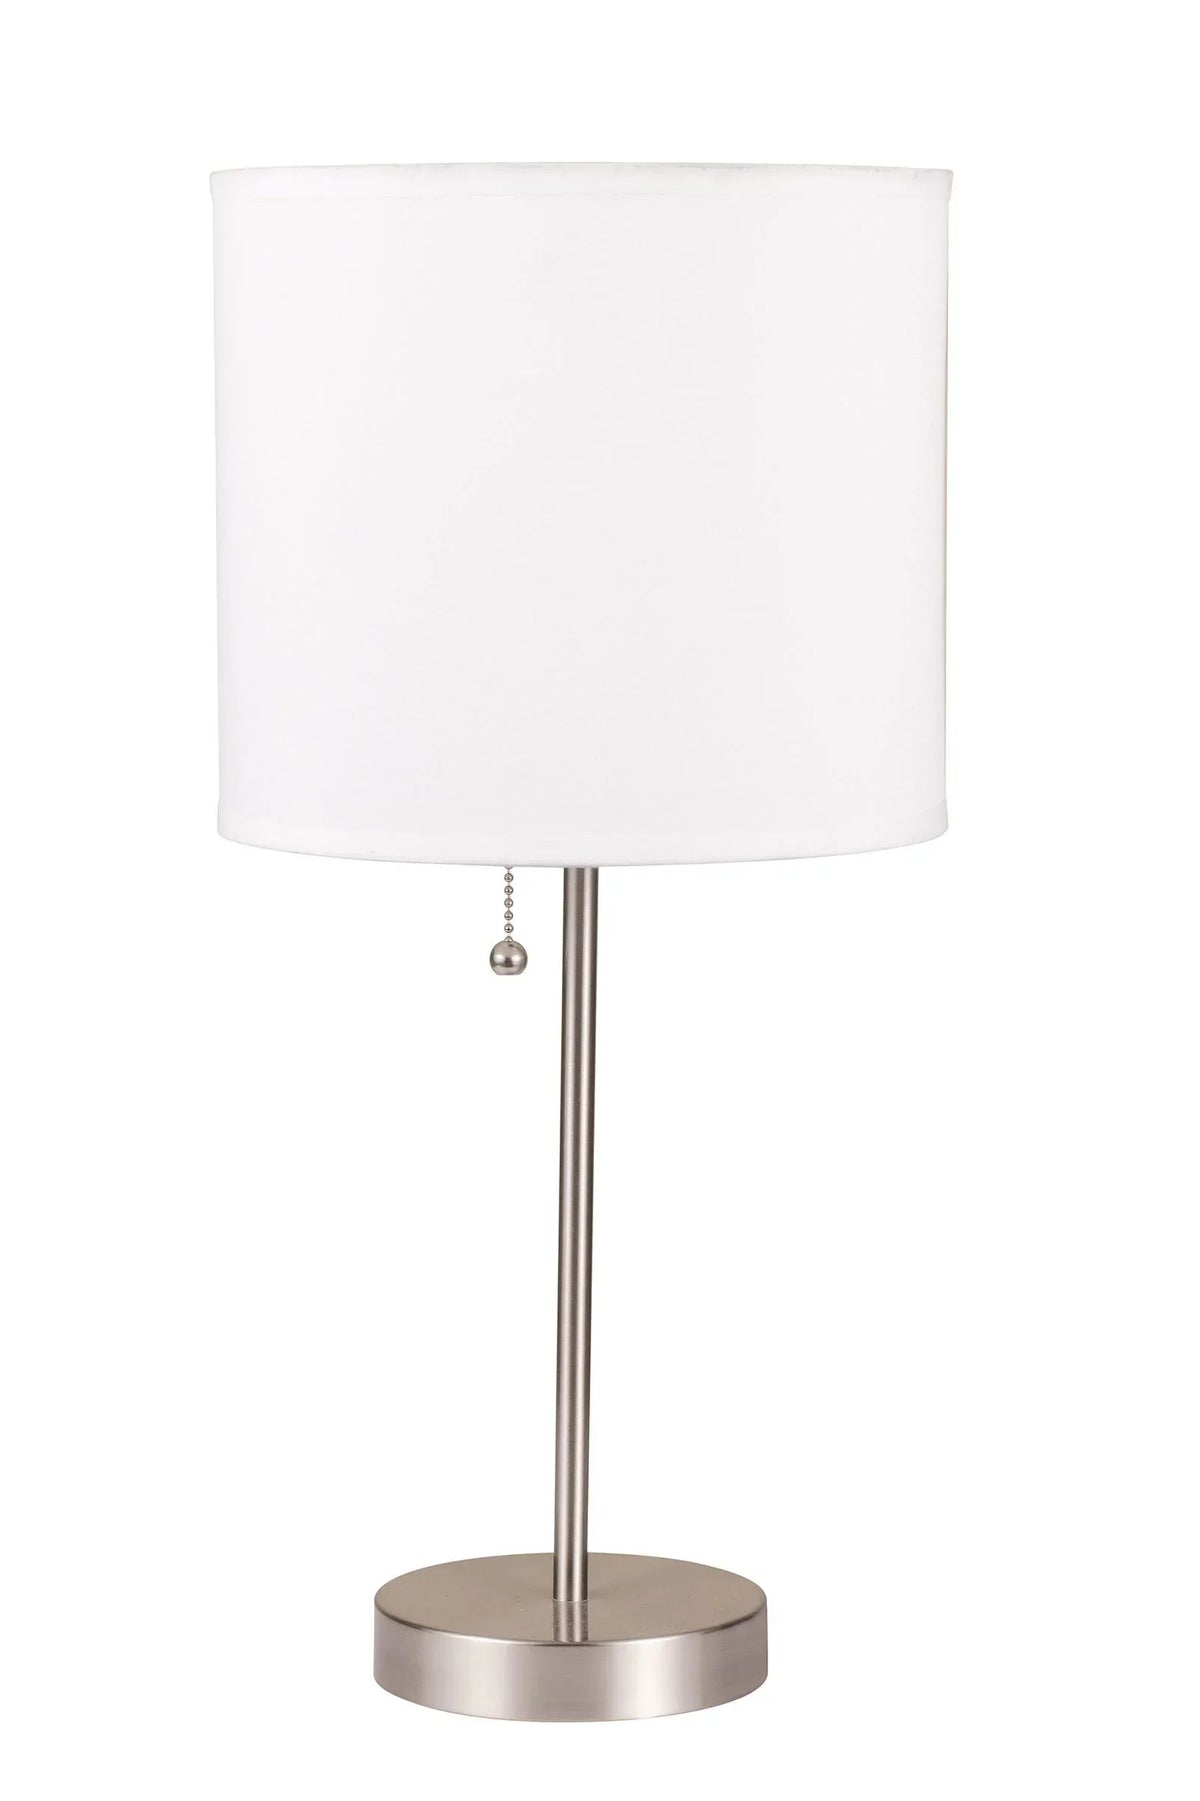 Vassy White Shade & Brush Silver Table Lamp Model 40042 By ACME Furniture